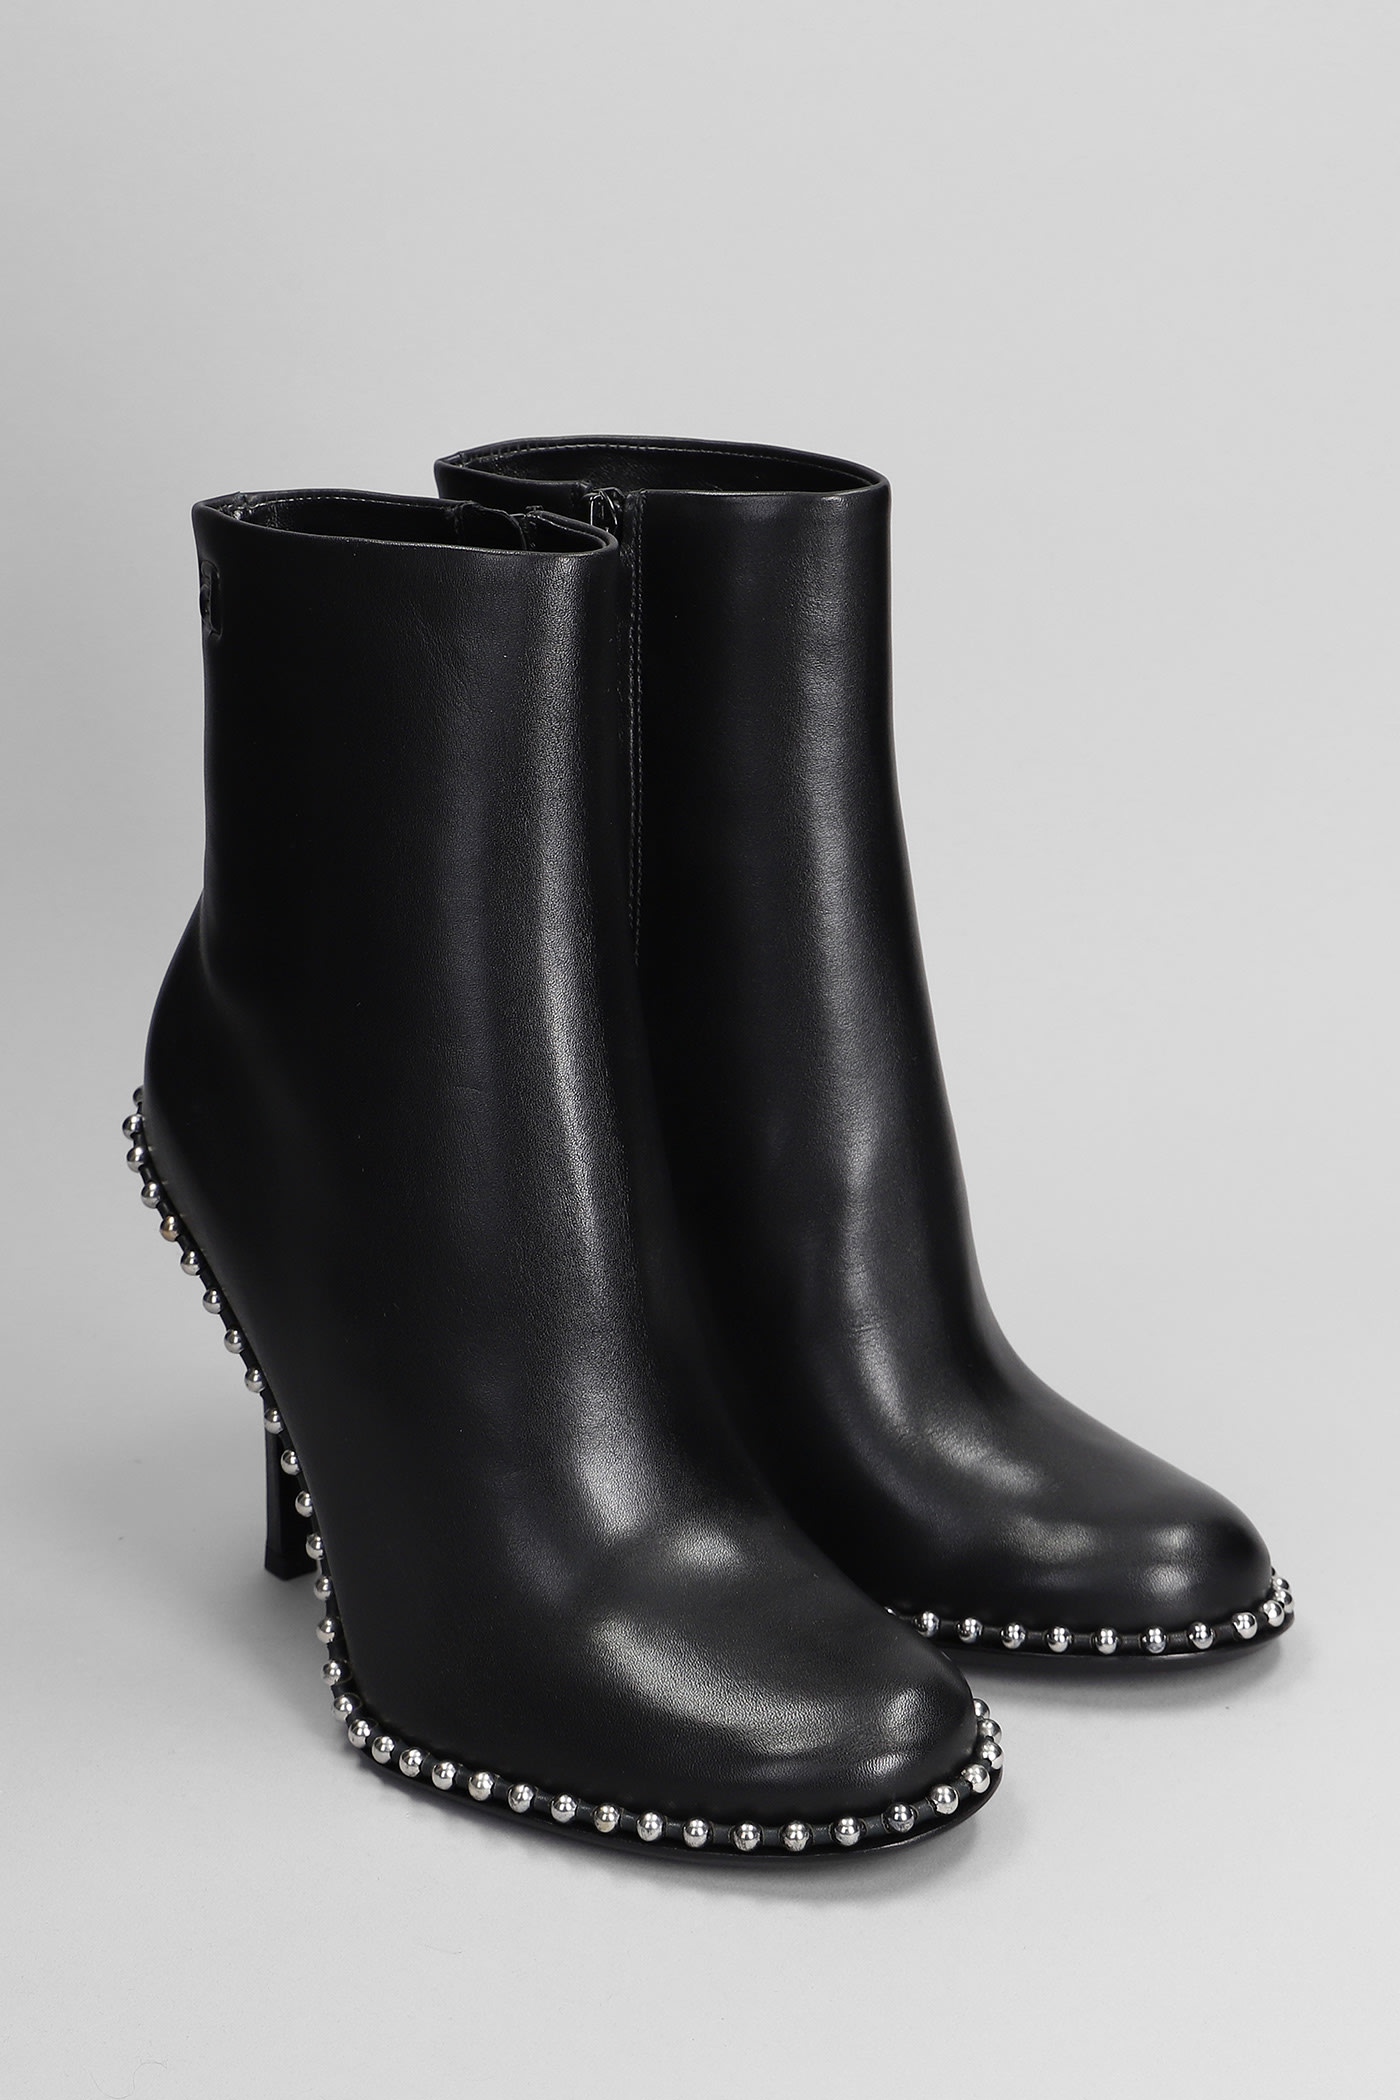 Shop Alexander Wang Nova 105 High Heels Ankle Boots In Black Leather